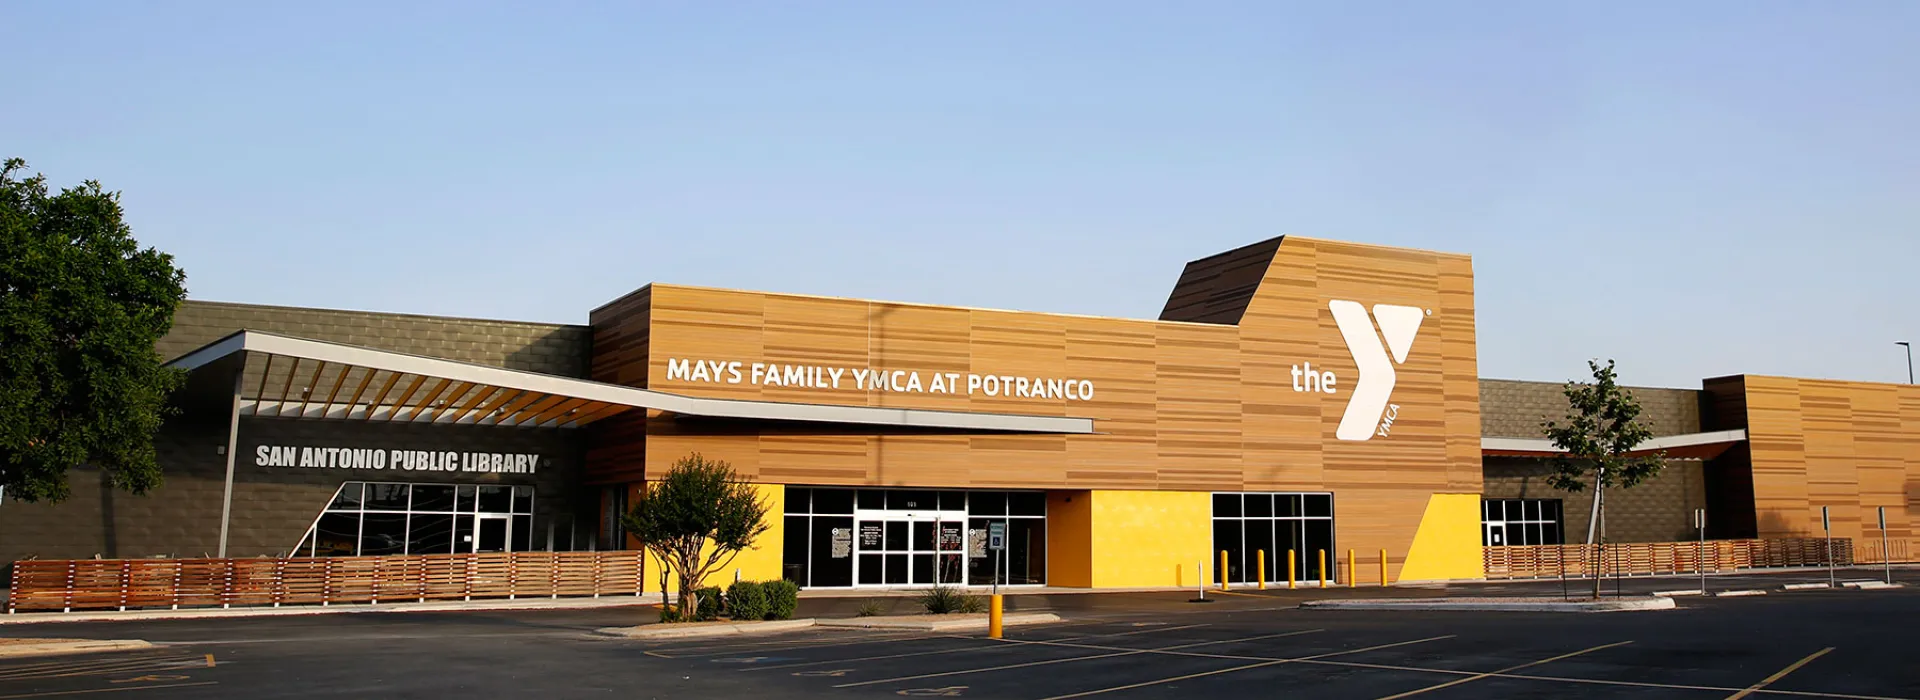 Join the Mays Family YMCA at Potranco today!